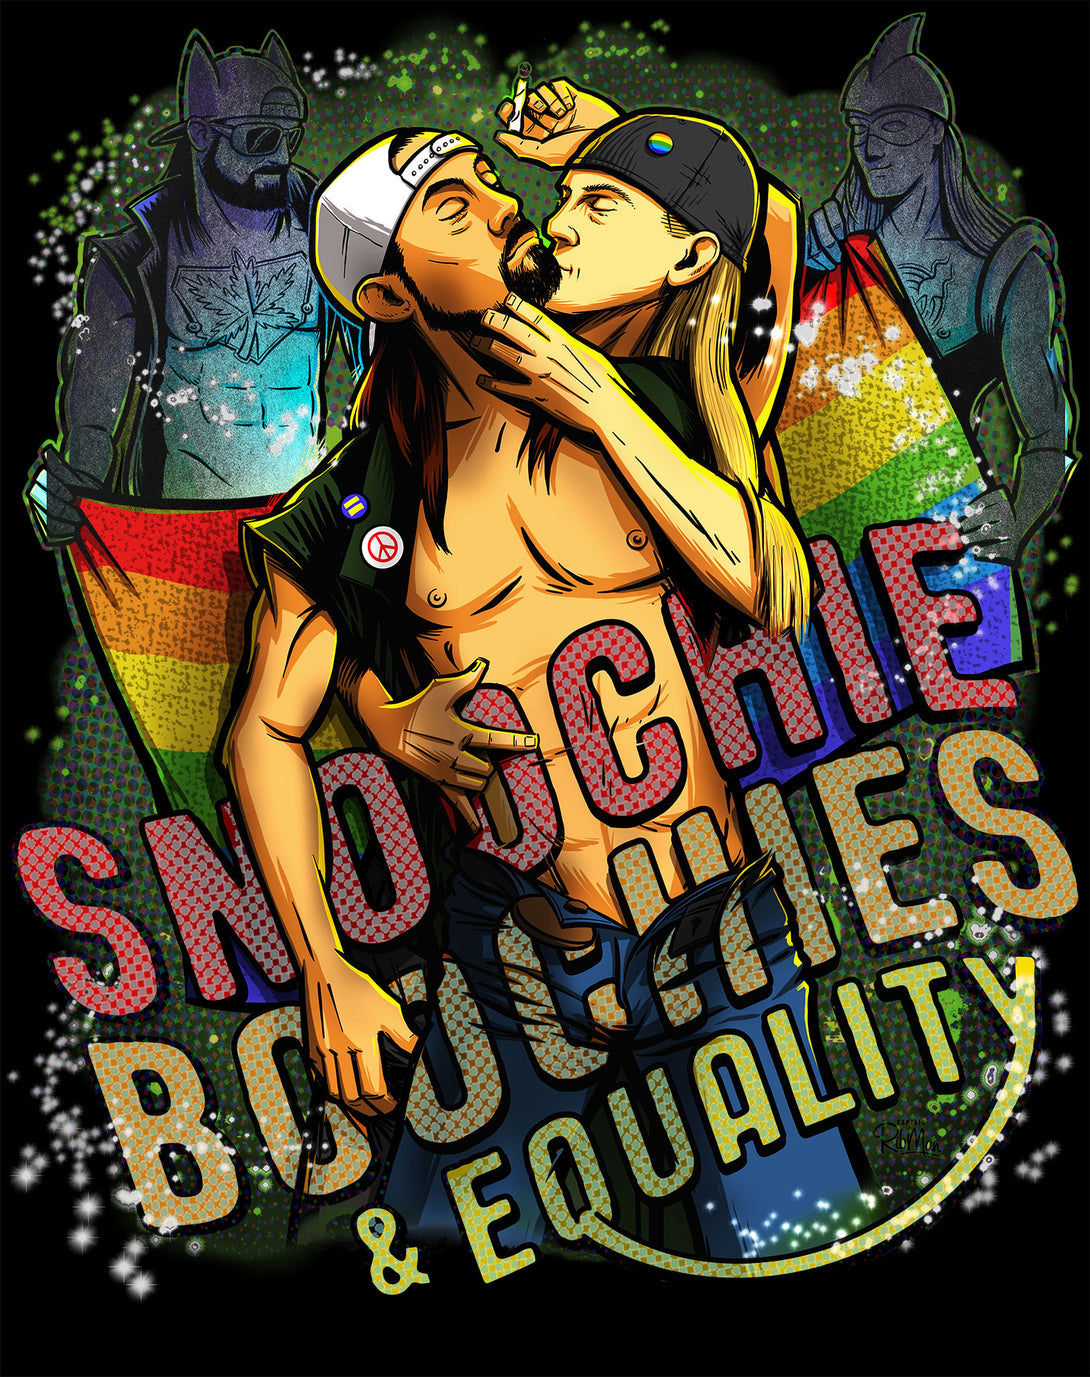 Kevin Smith Jay & Silent Bob Reboot LGBTQ Splash LDN Edition Official Women's T-Shirt Black - Urban Species Design Close Up